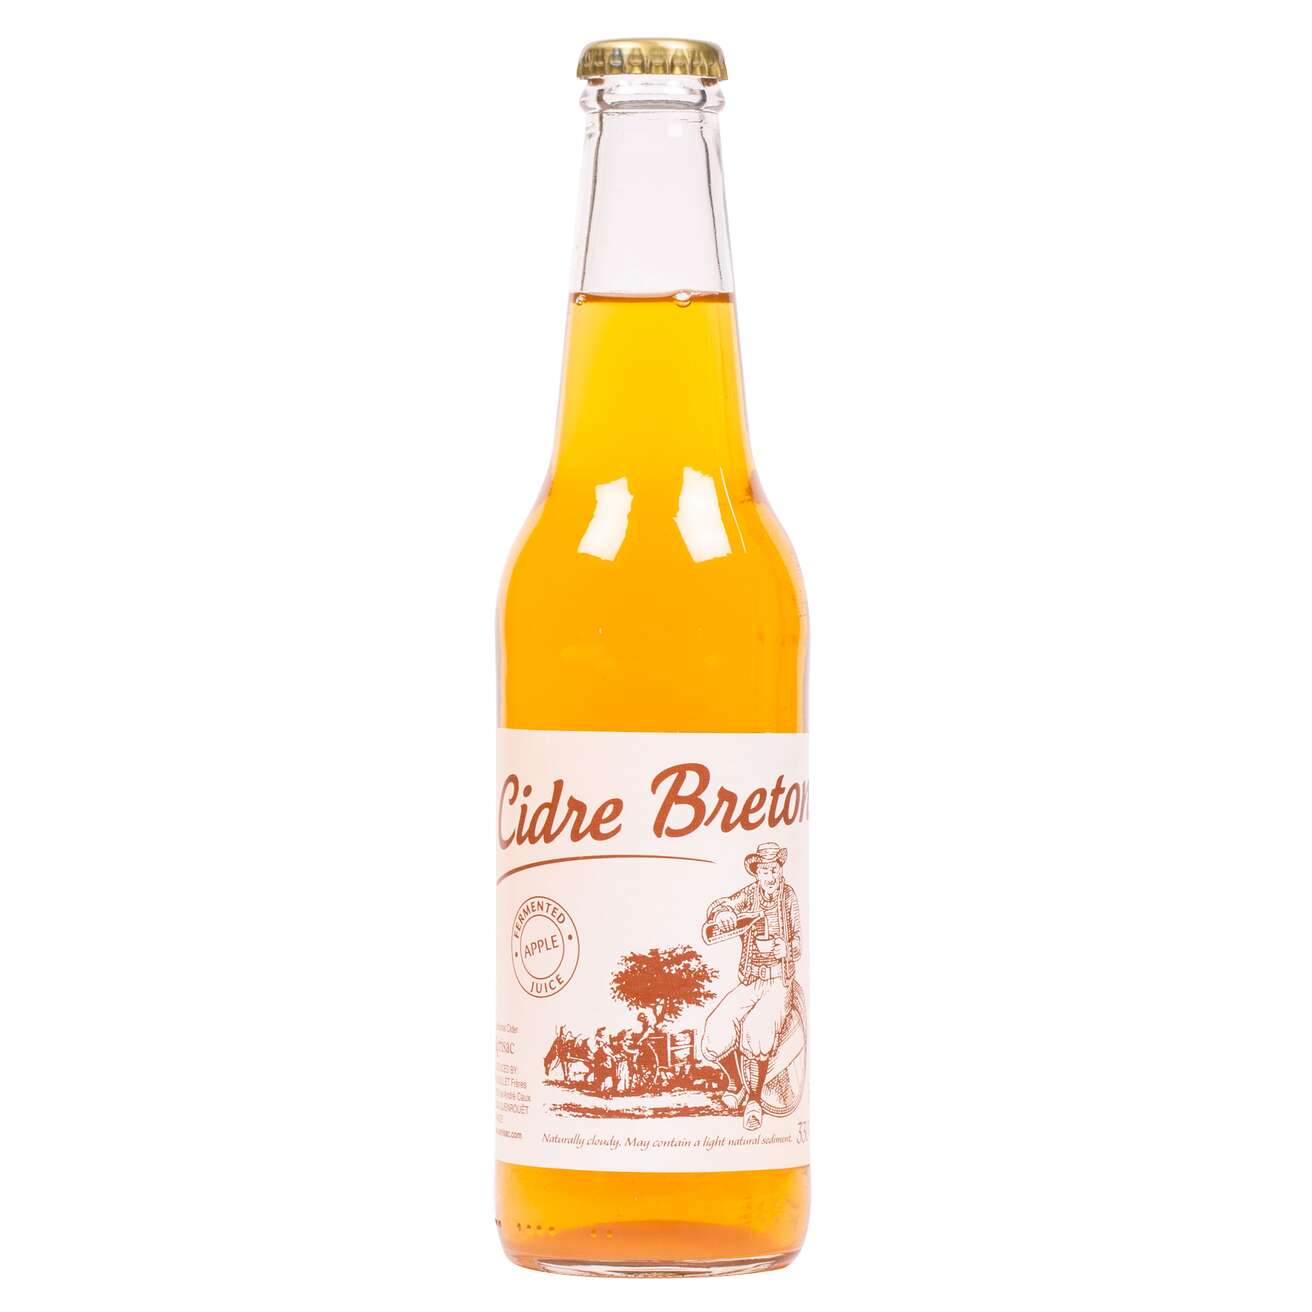 Kerisac Cidre Breton 330ml Bottle